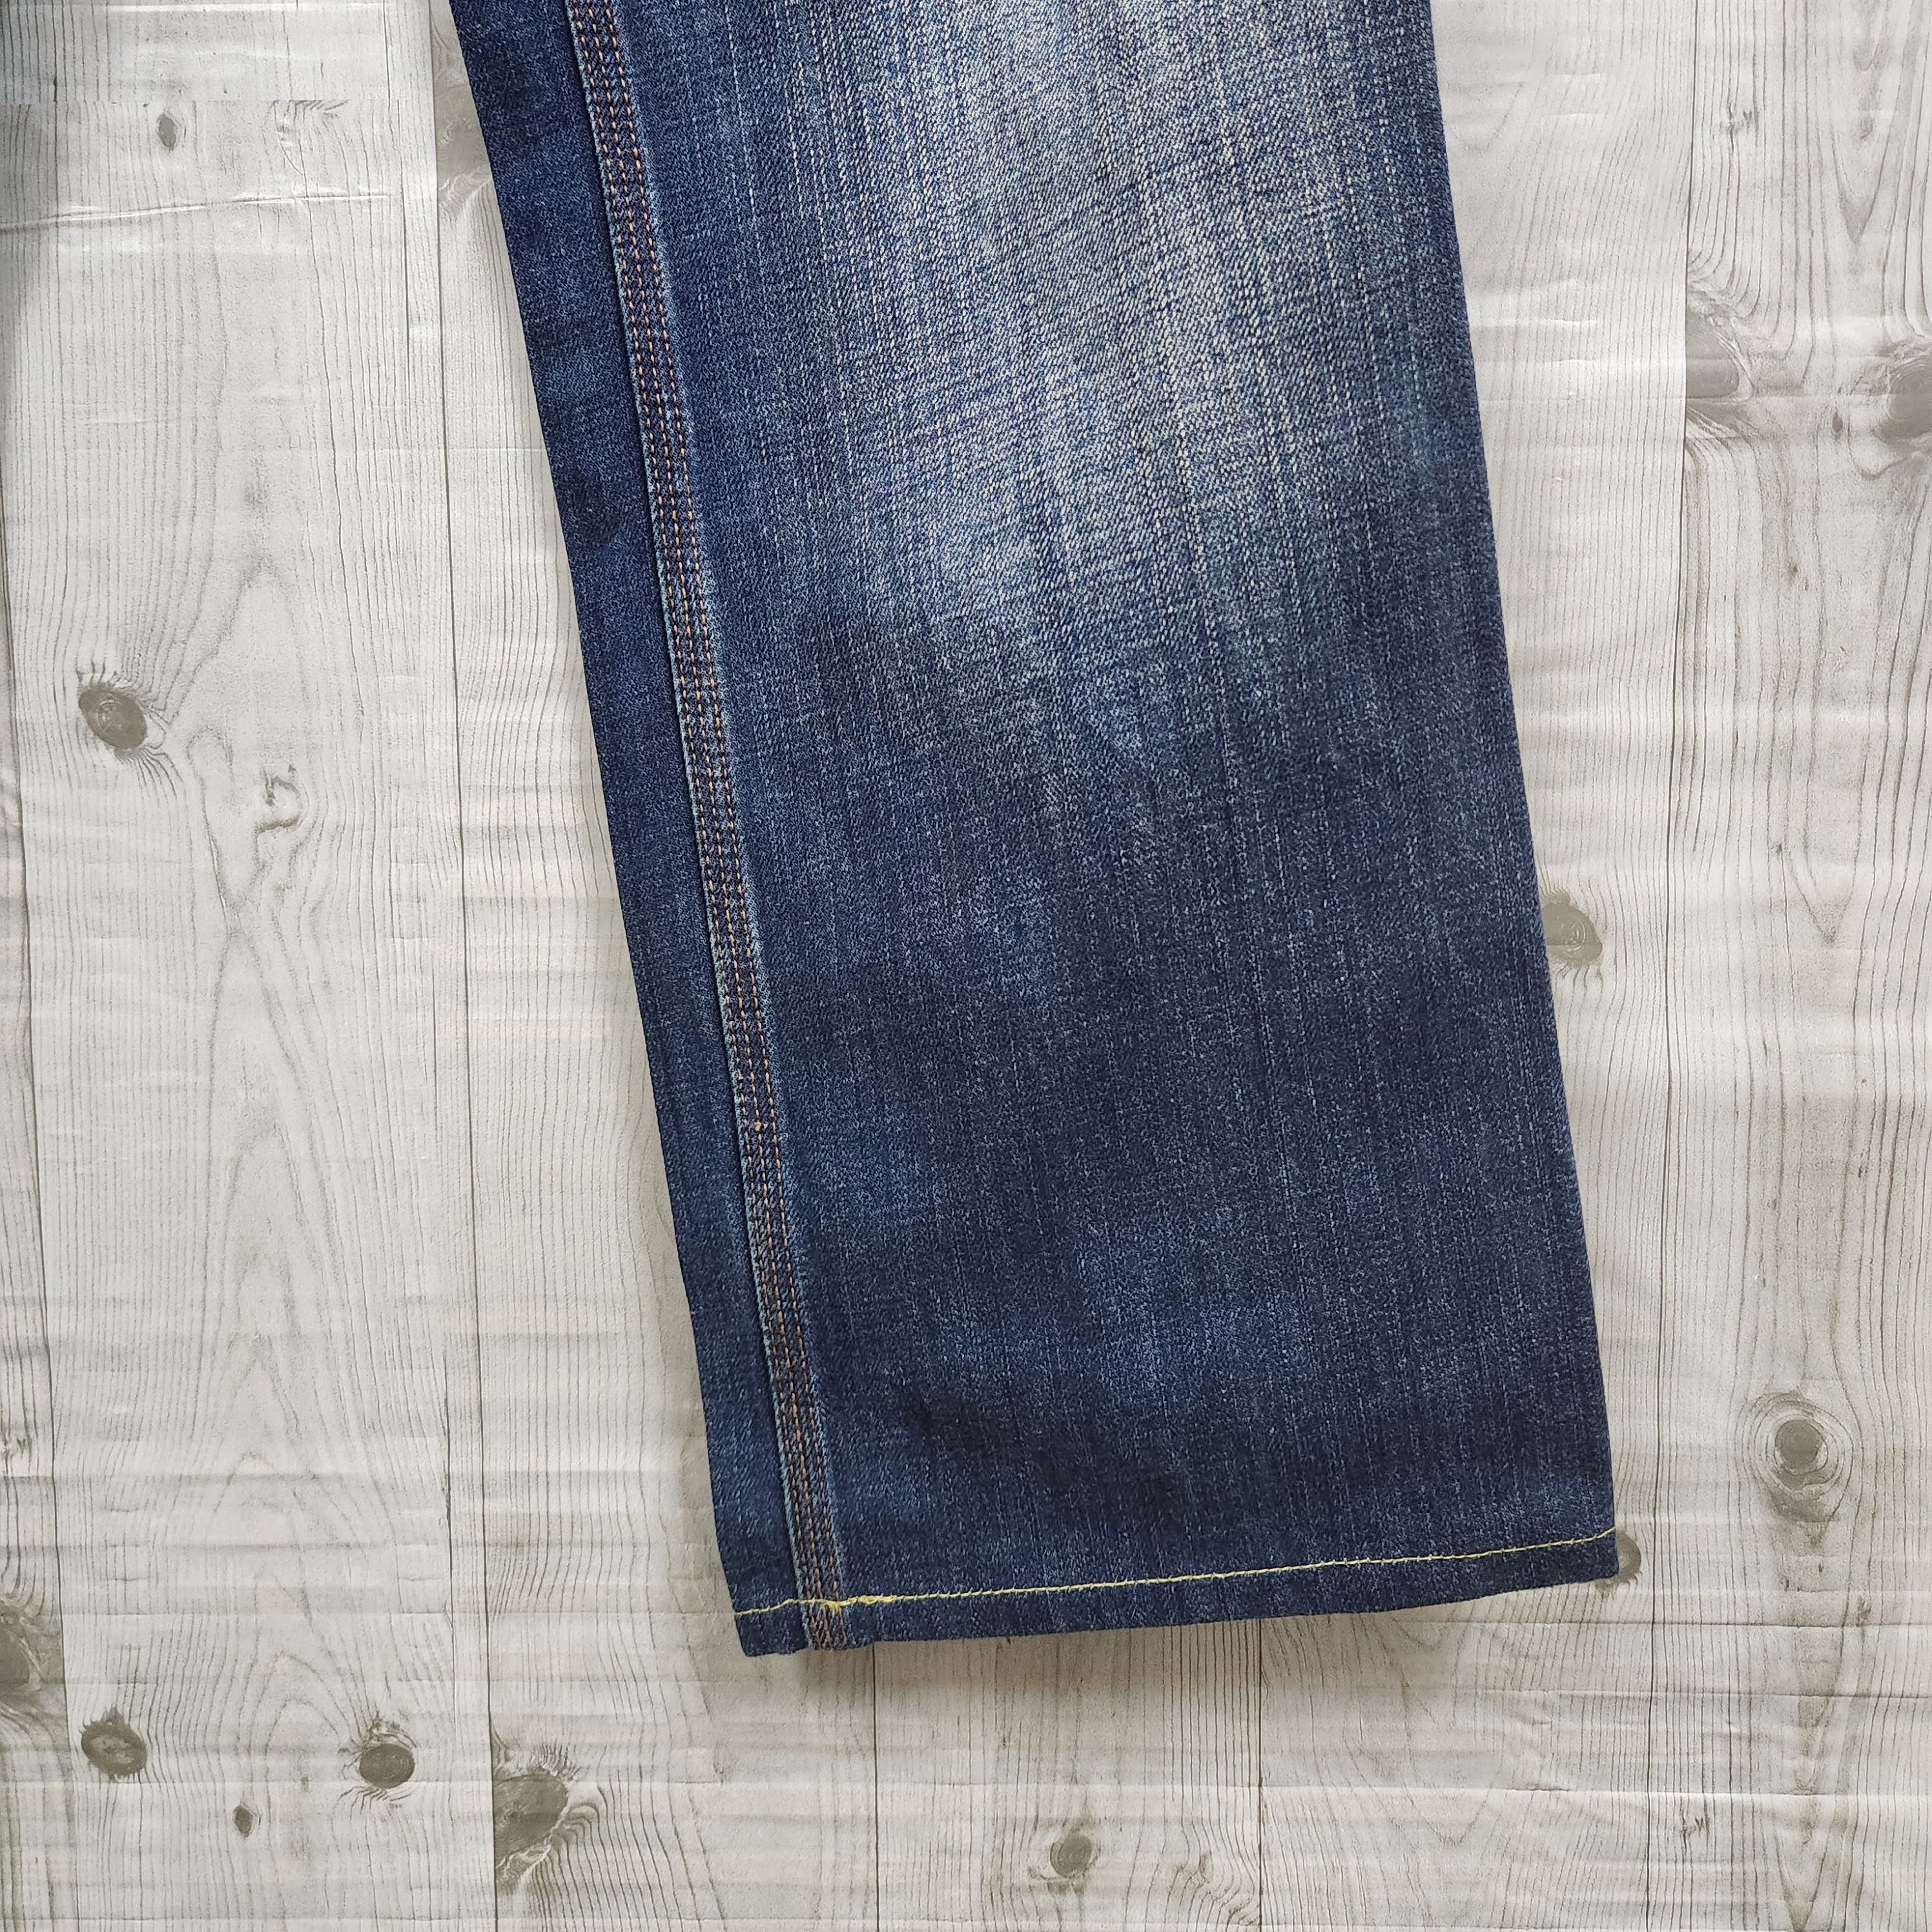 Global Work Denim Four Front Pockets Japanese Indigo Jeans - 8